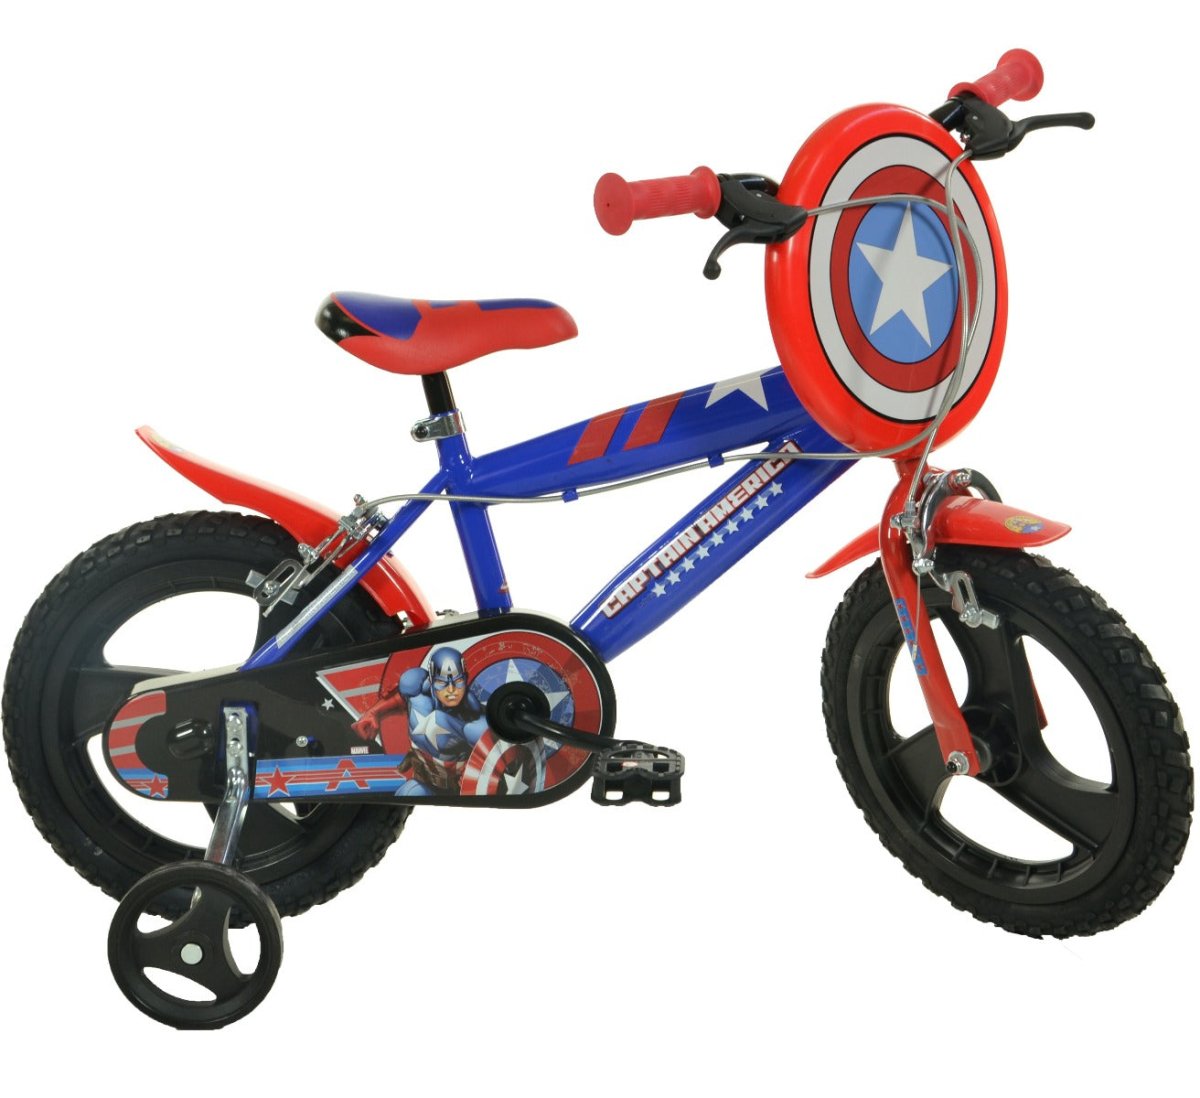 Licensed Children’s Pedal Bike - Captain America 16" Wheel Bicycle